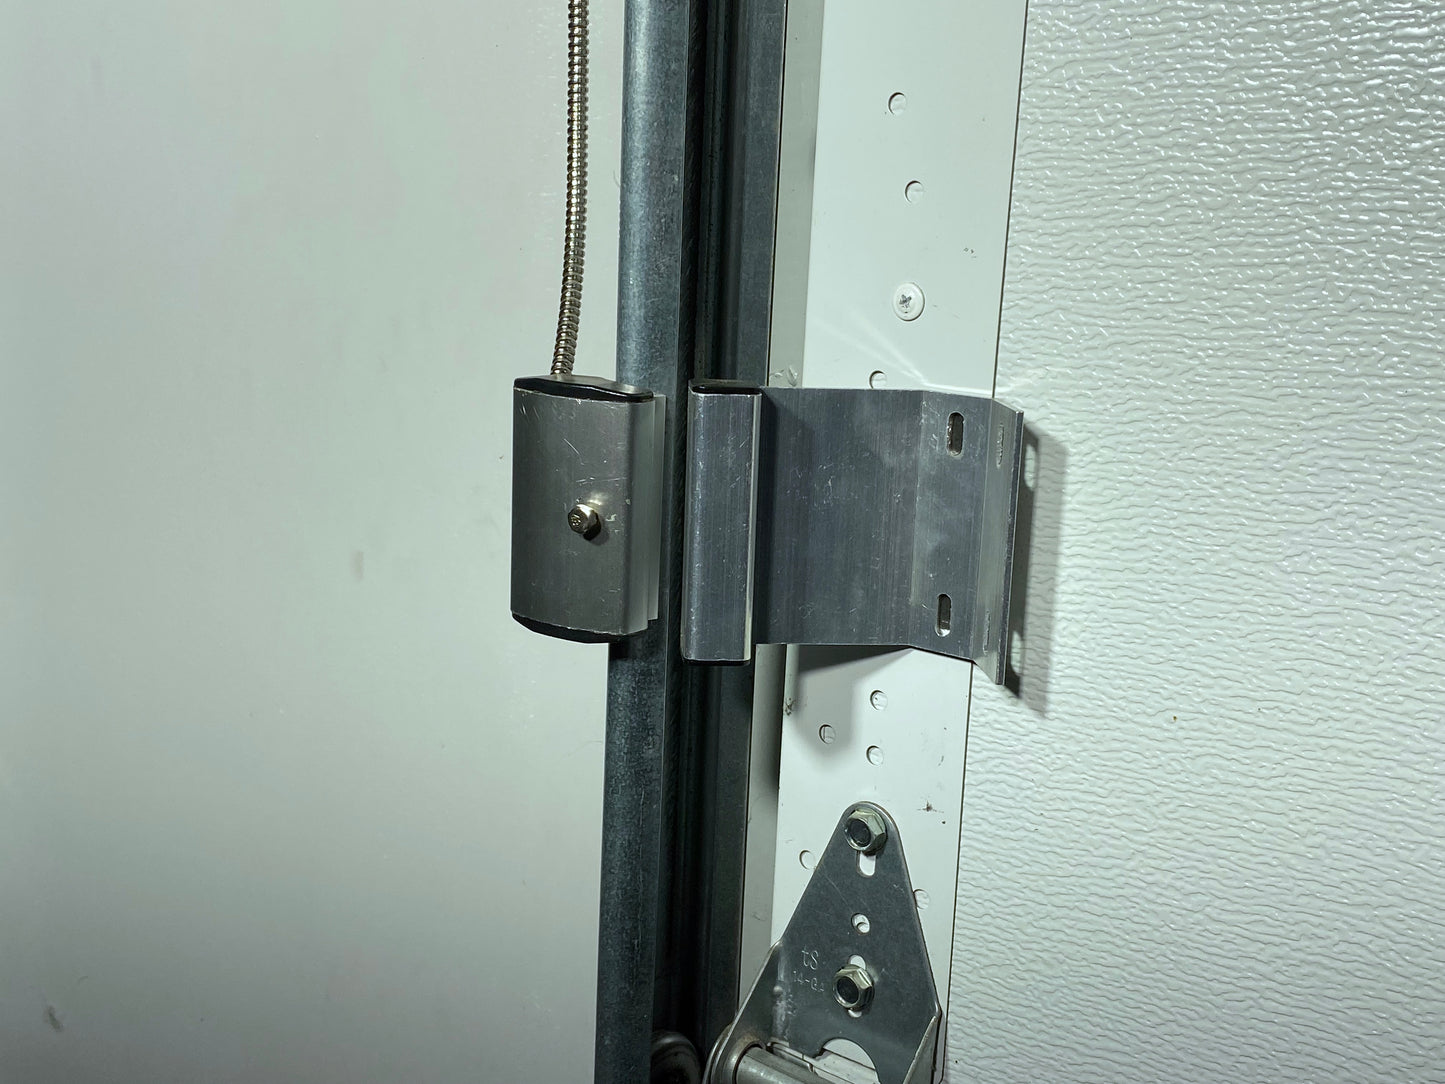 Additional PRO Door Kit with J-track mounted sensor